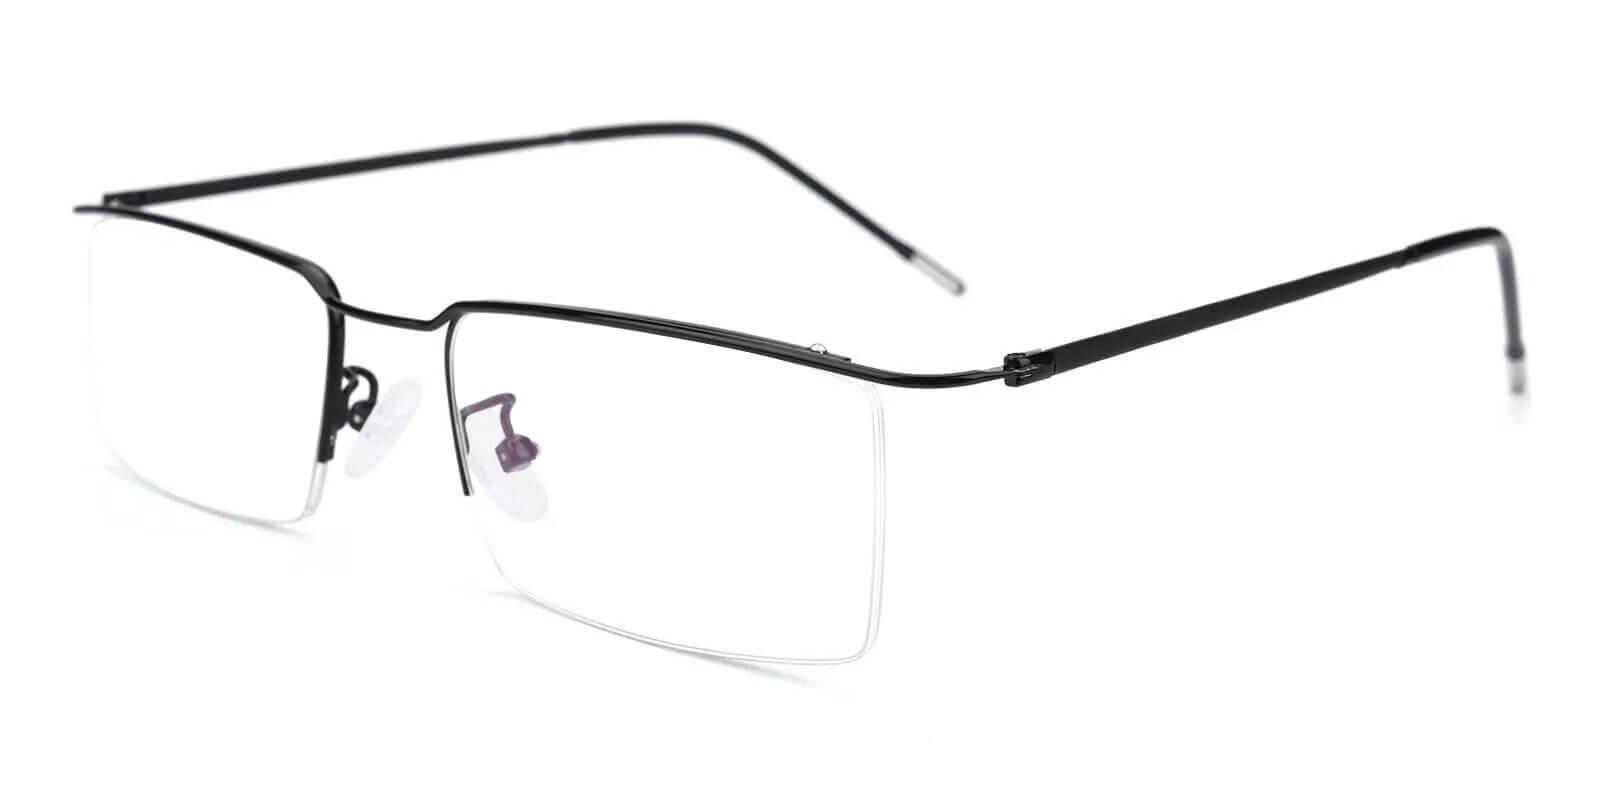 Wit Black Metal Eyeglasses , NosePads Frames from ABBE Glasses